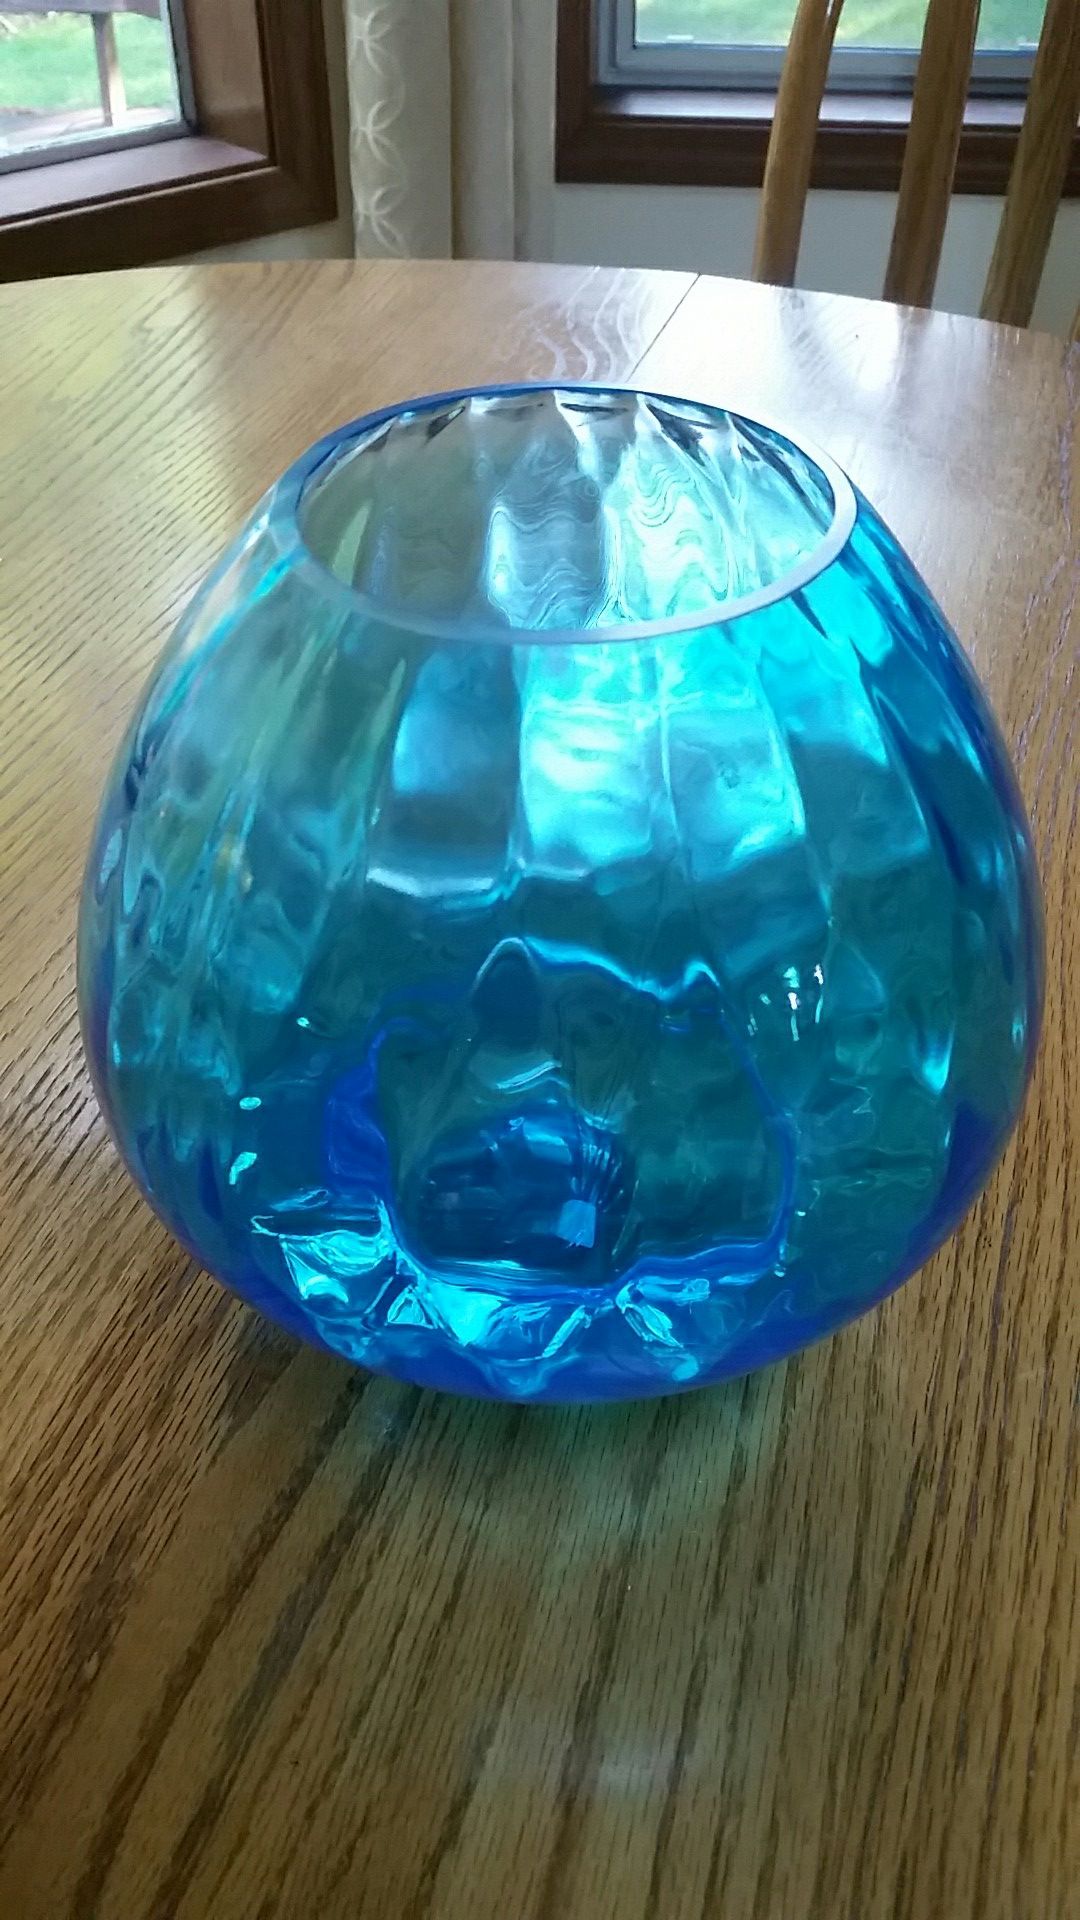 PartyLite Beautiful Blue Candle Holder Vase